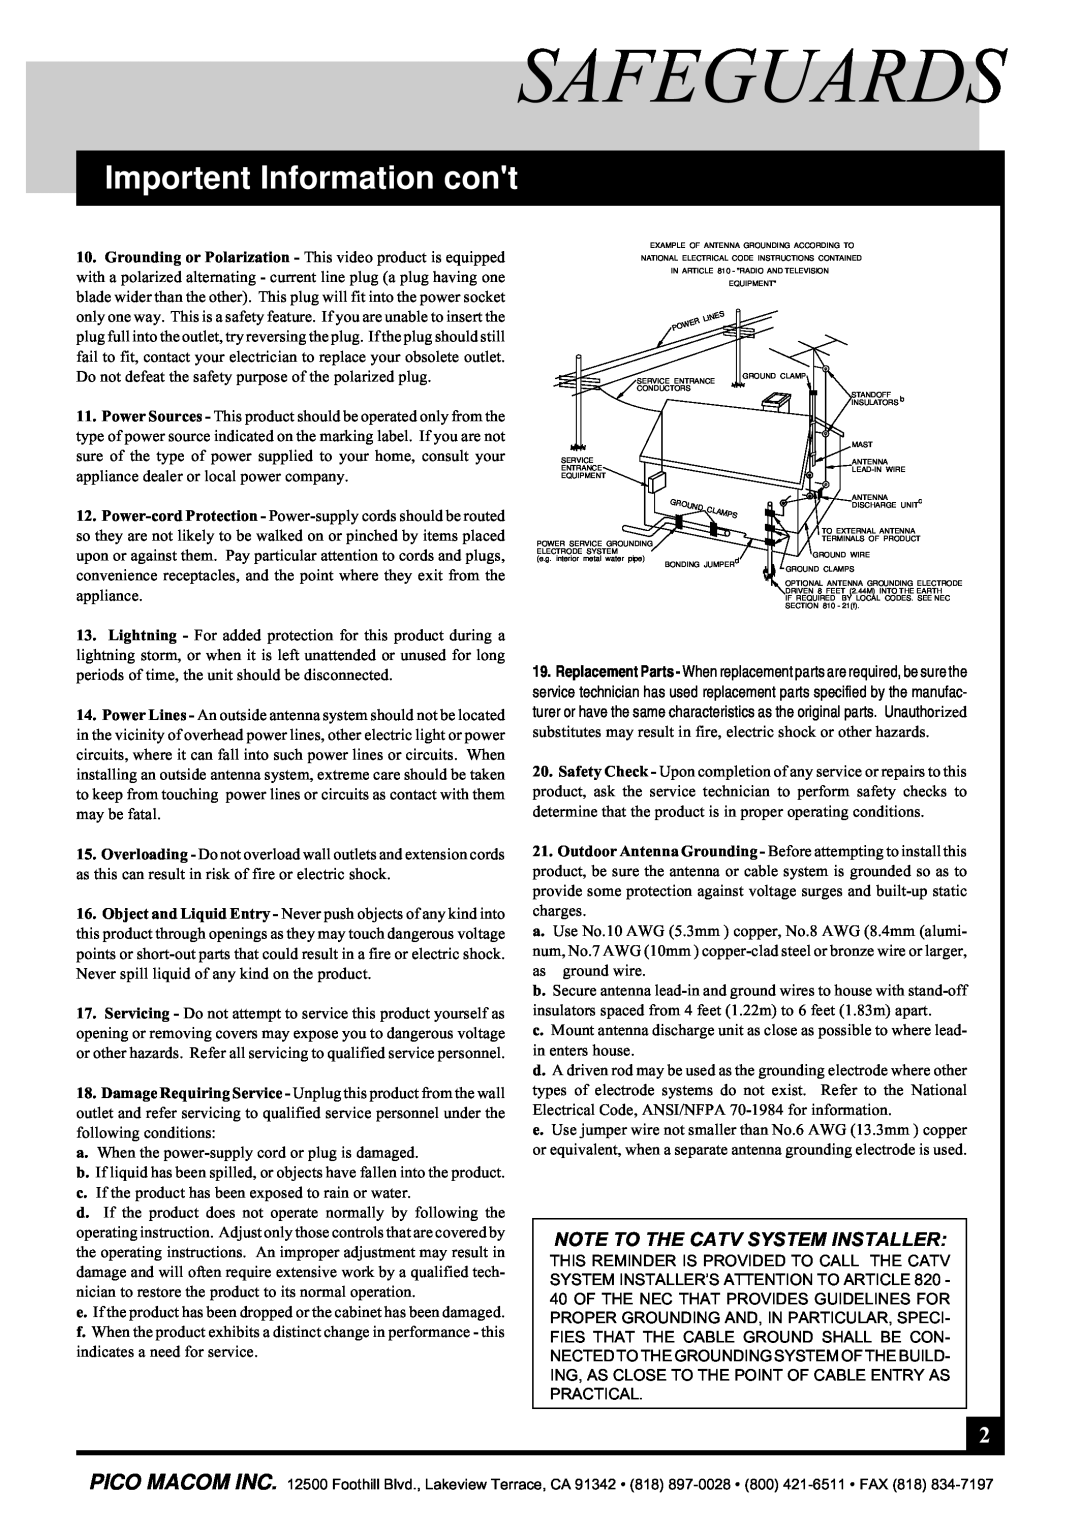 Pico Macom CAM-35UNIV operation manual Importent Information cont, Safeguards, Note To The Catv System Installer 